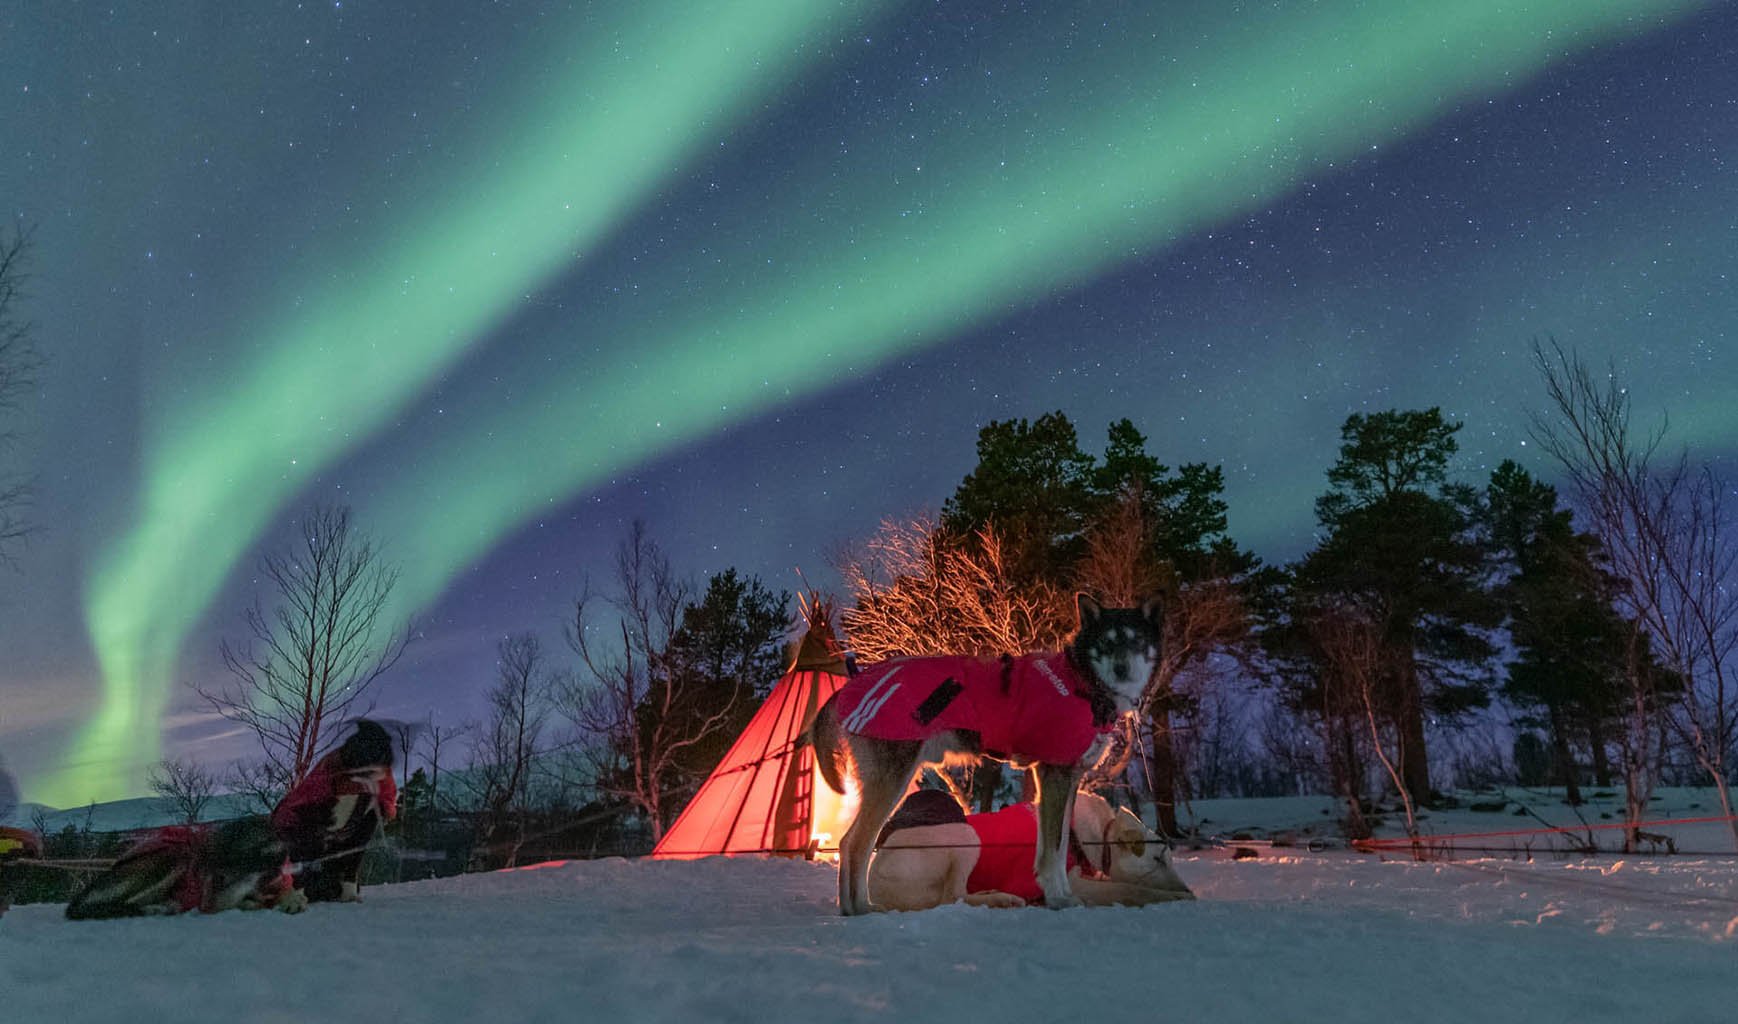 Northern lights photo tour Abisko – with Rosén (5 days) - Kiruna